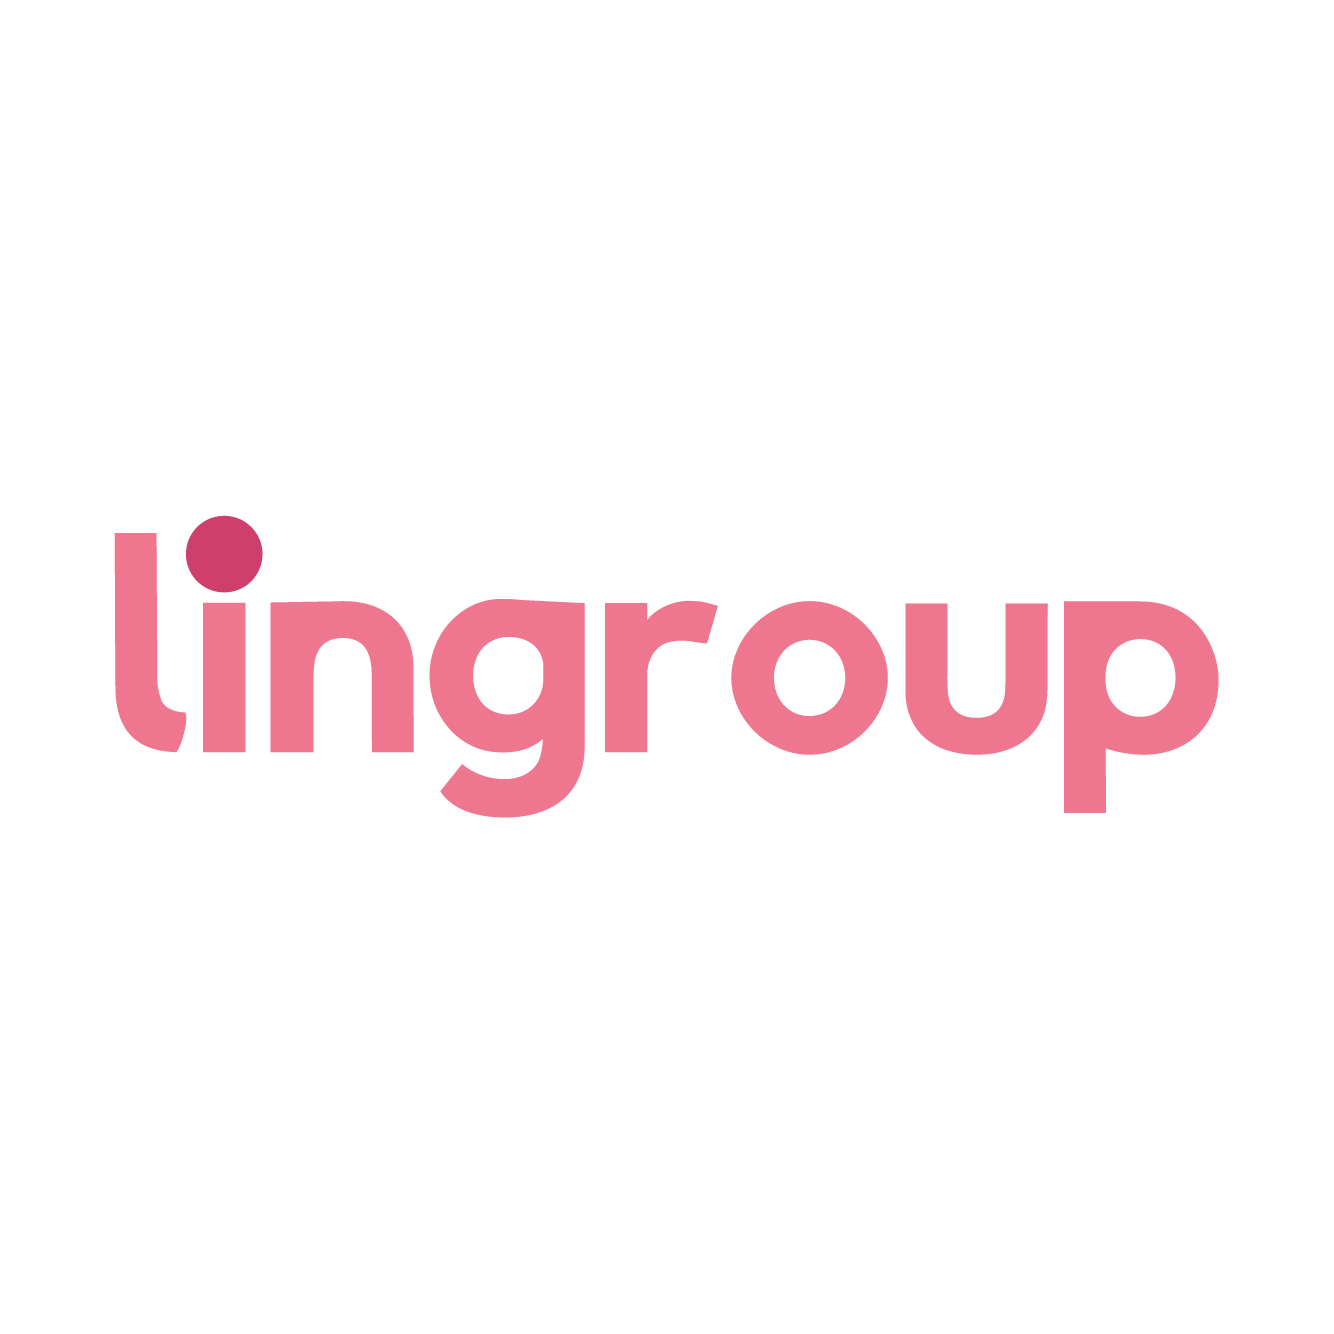 Lingroup Global